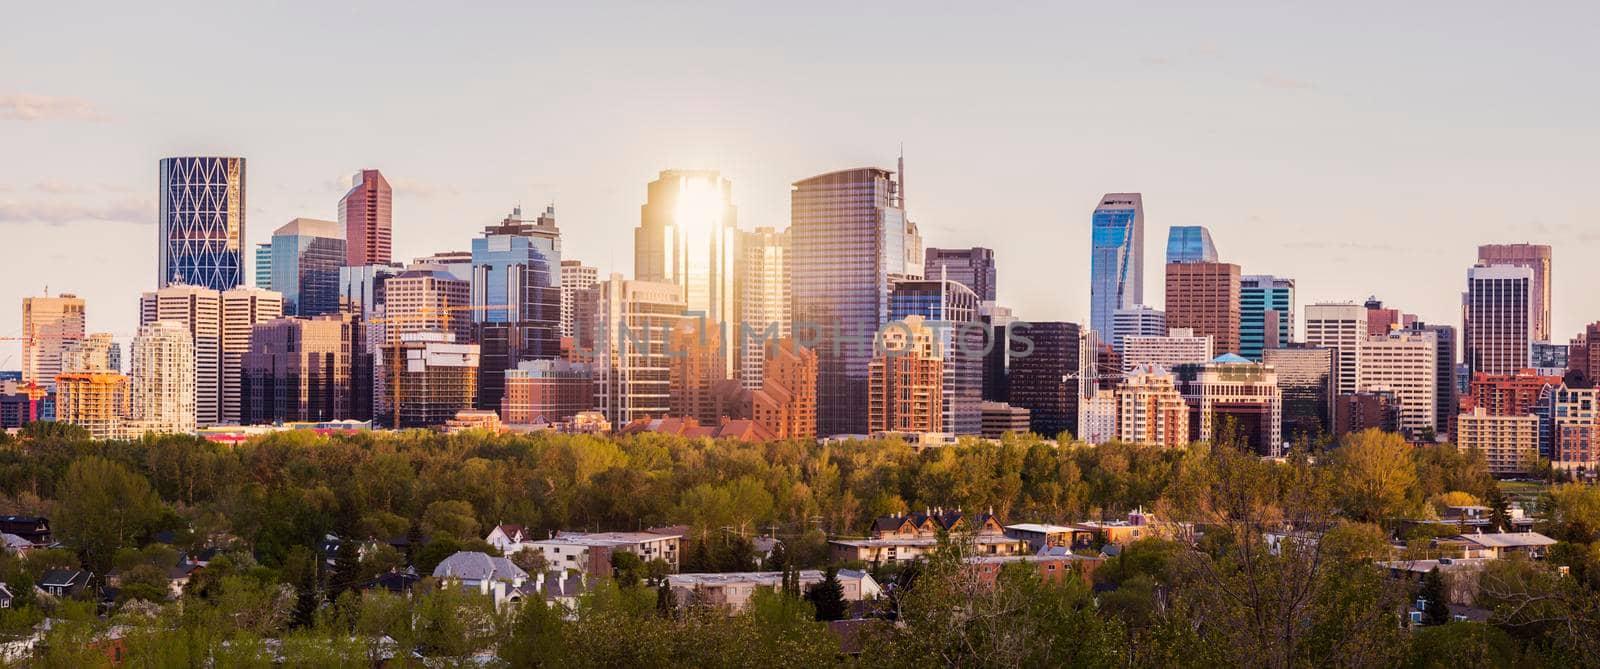 Calgary - panorama of city by benkrut